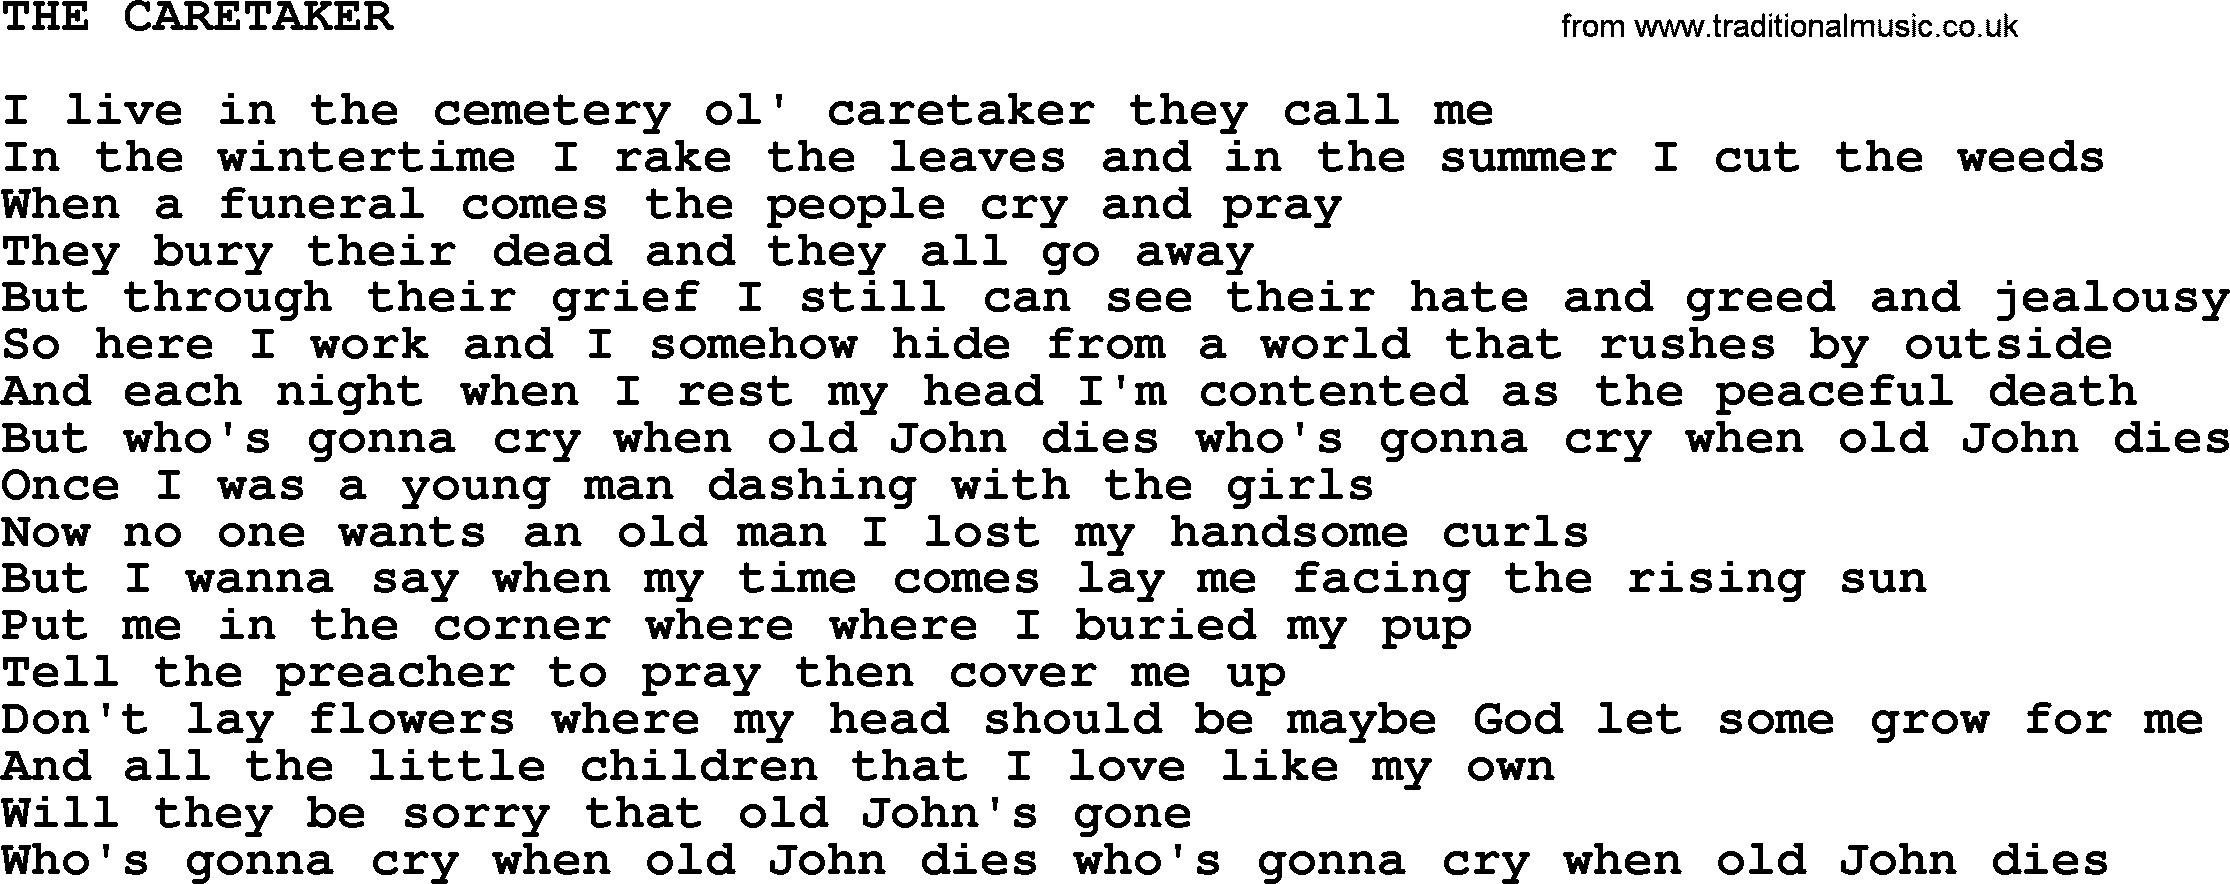 Johnny Cash song The Caretaker.txt lyrics